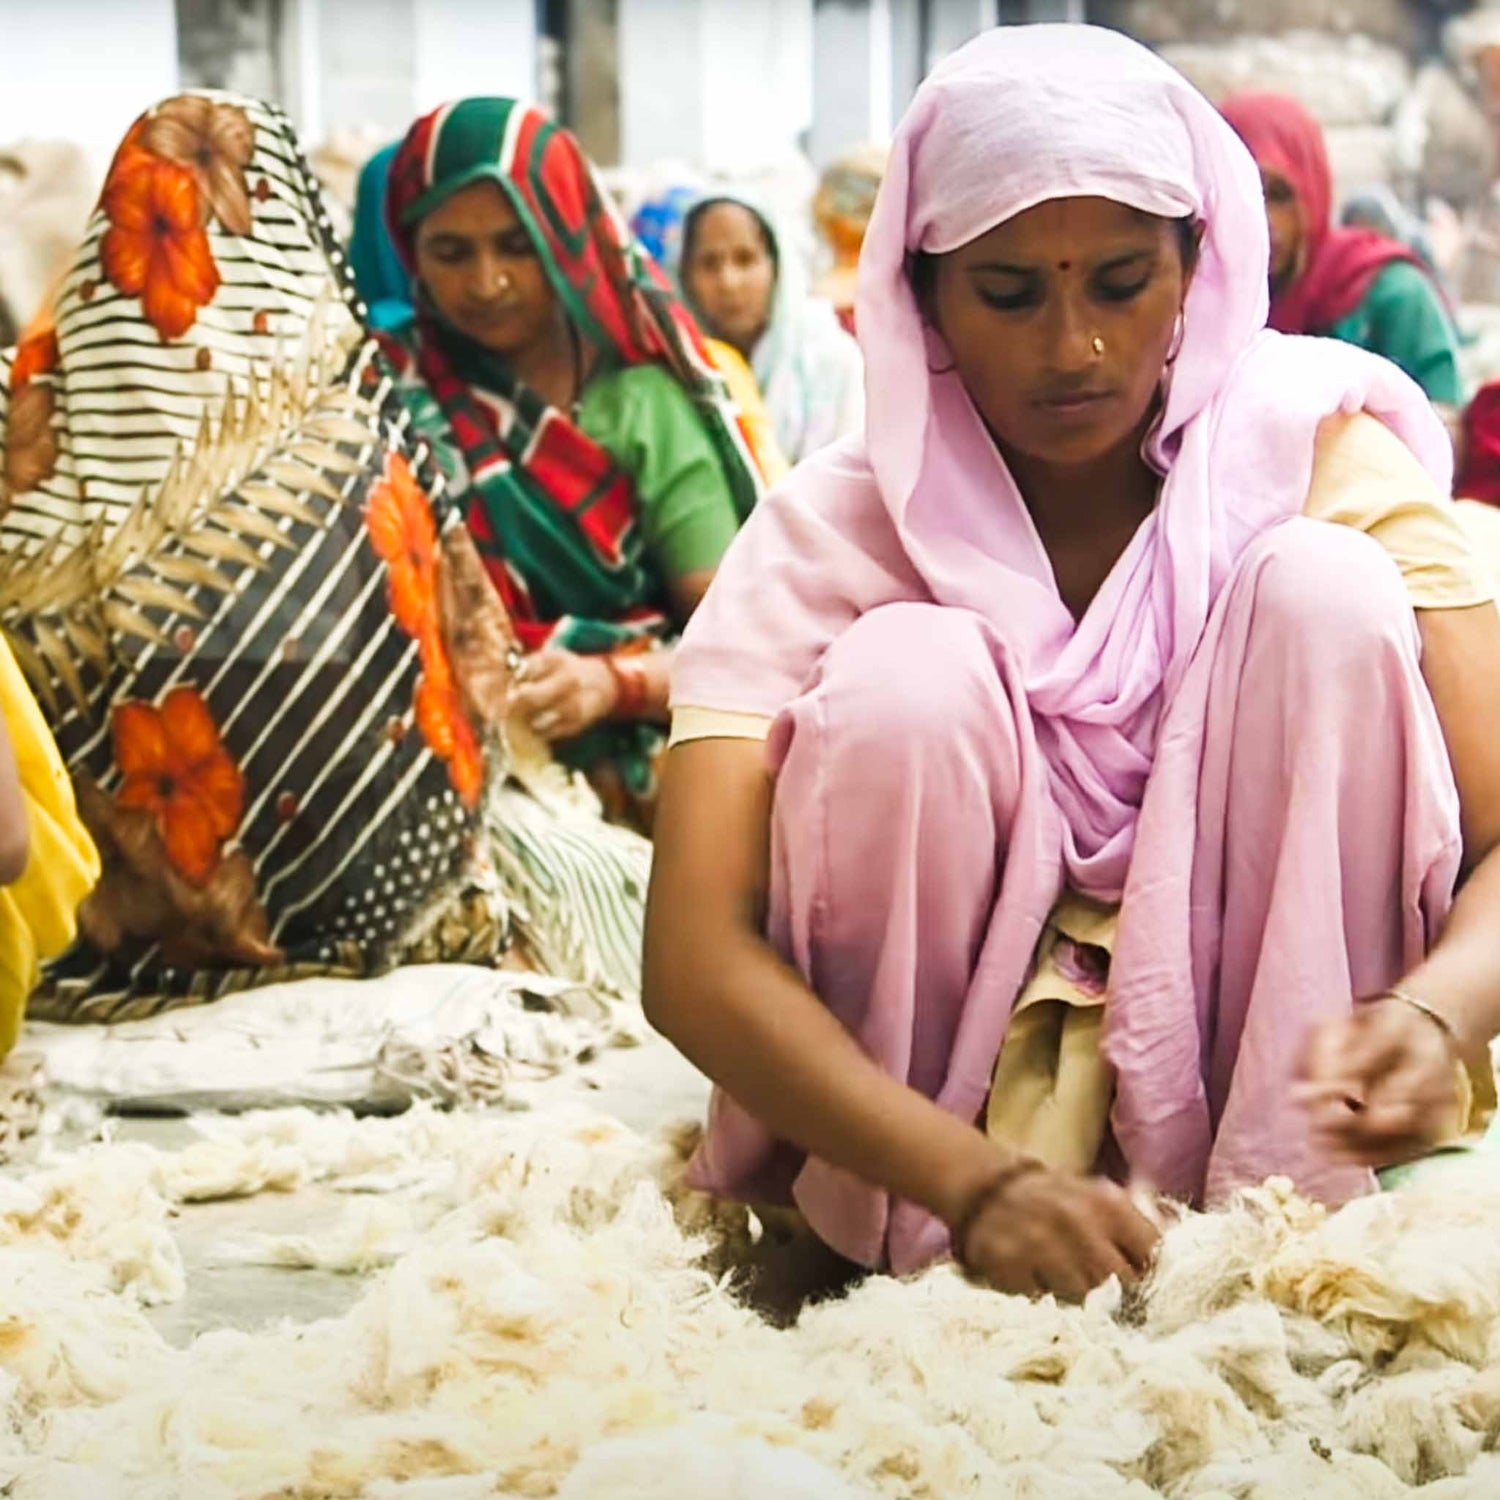 Indian women sorting textile material.